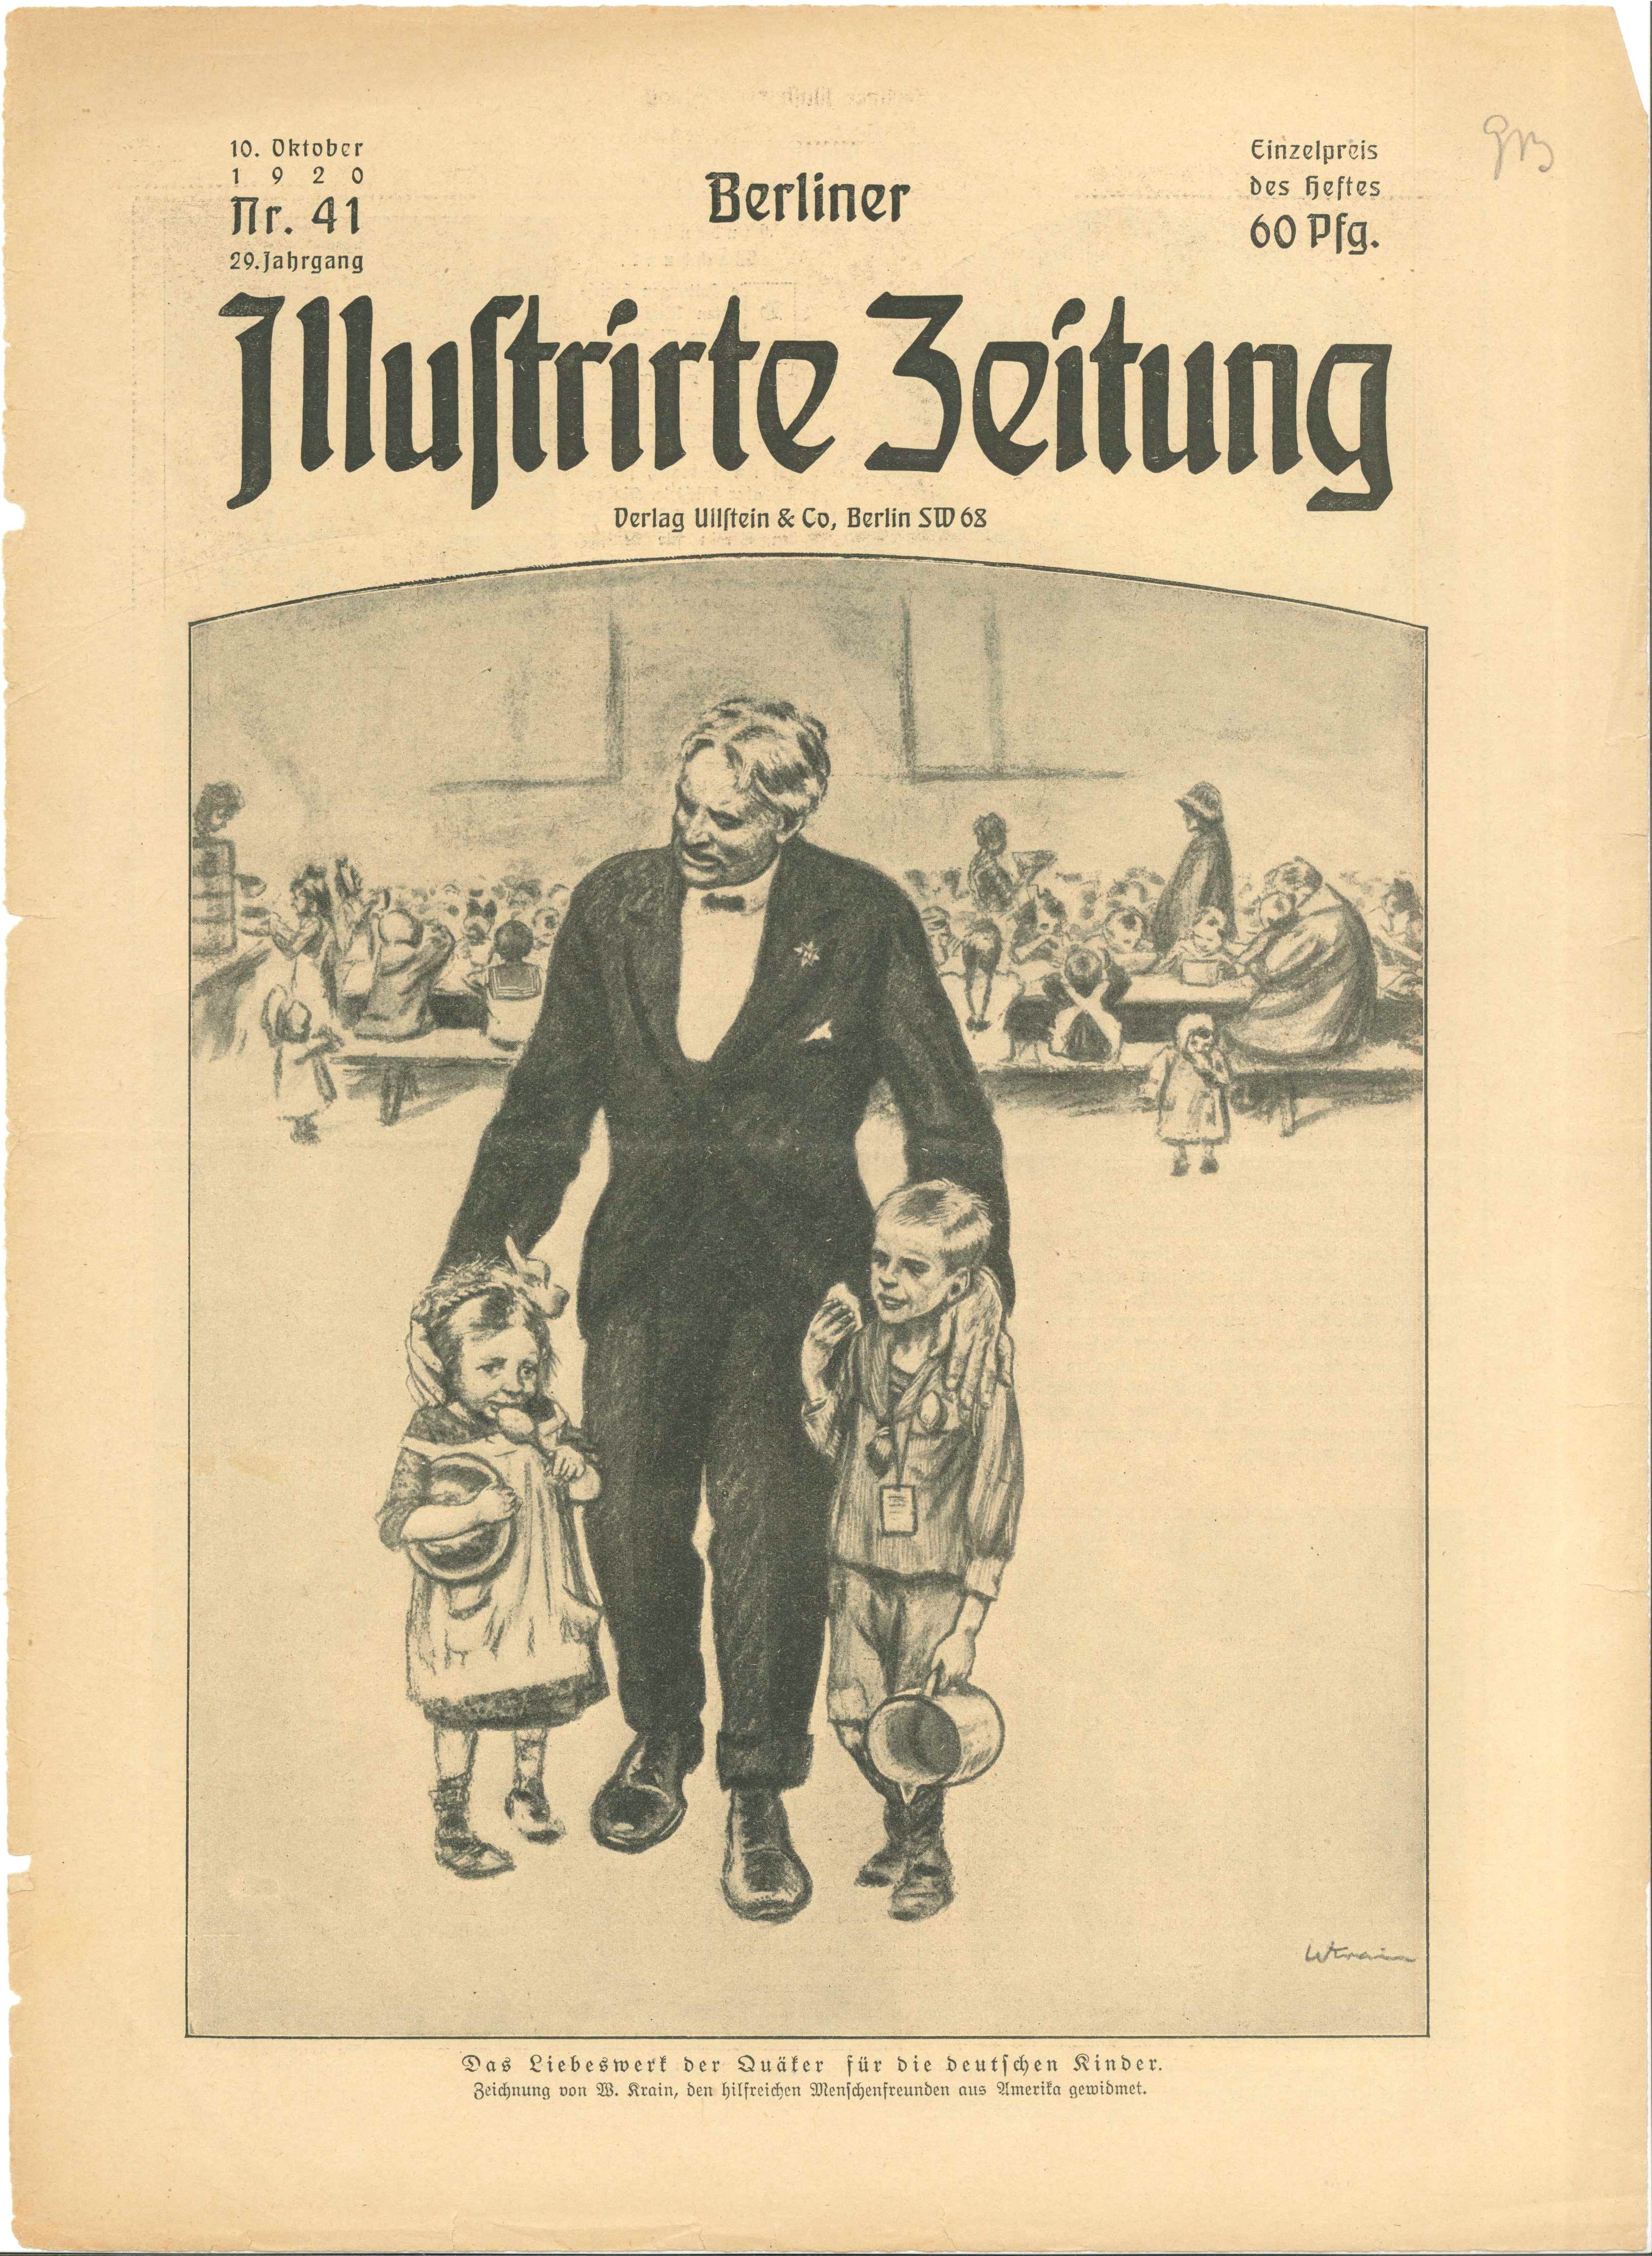 BIZ, Nr. 41, 1920, Titelseite (Kurt Tucholsky Literaturmuseum CC BY-NC-SA)